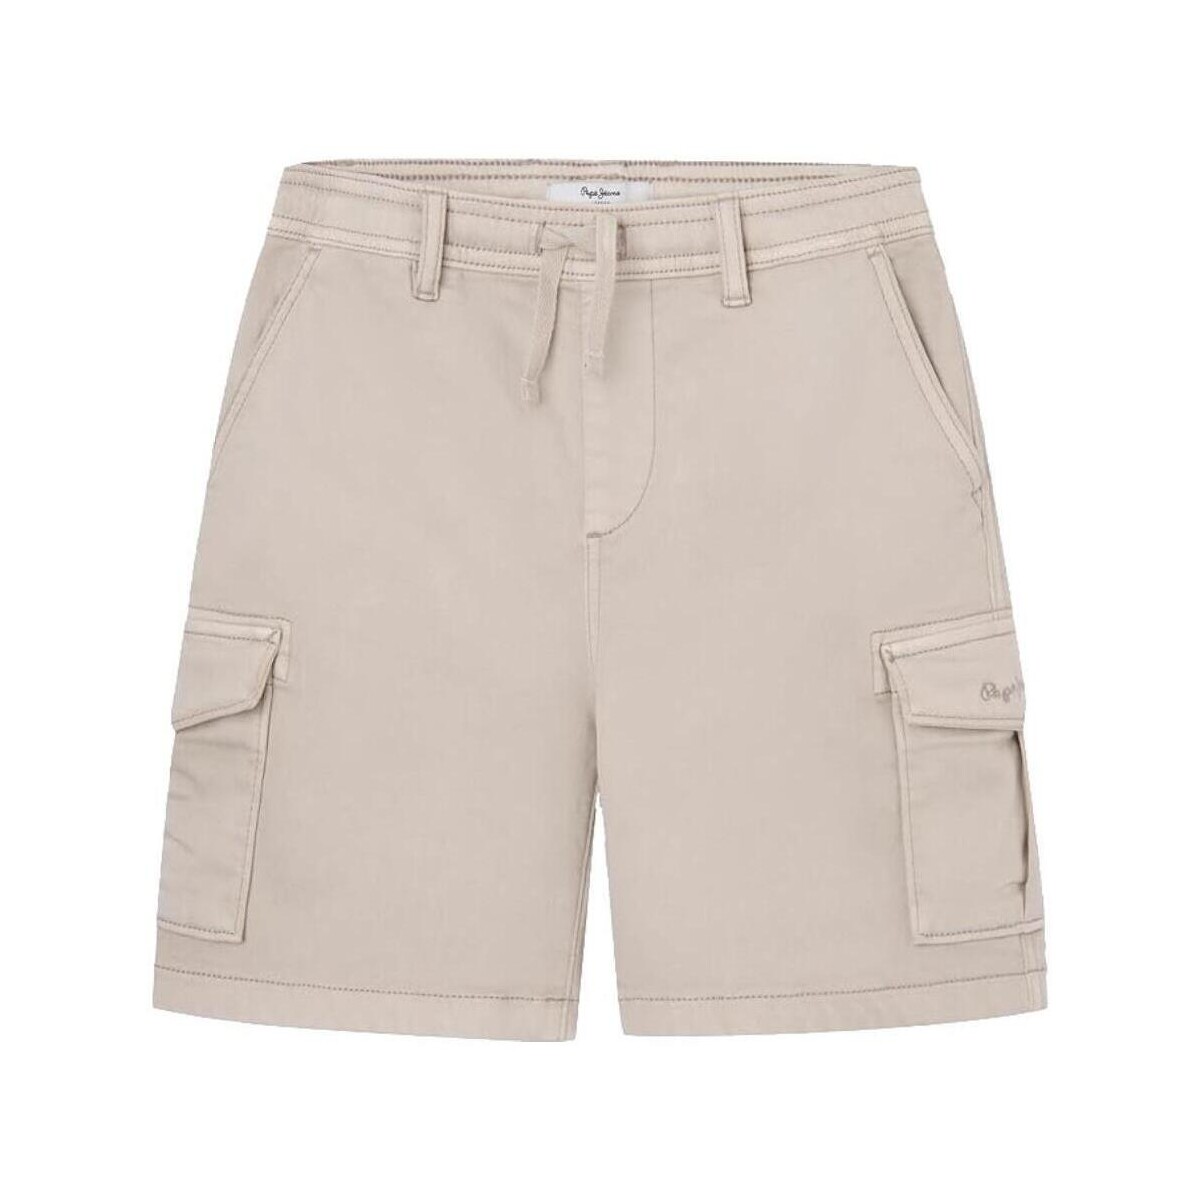 vaatteet Pojat Shortsit / Bermuda-shortsit Pepe jeans  Beige